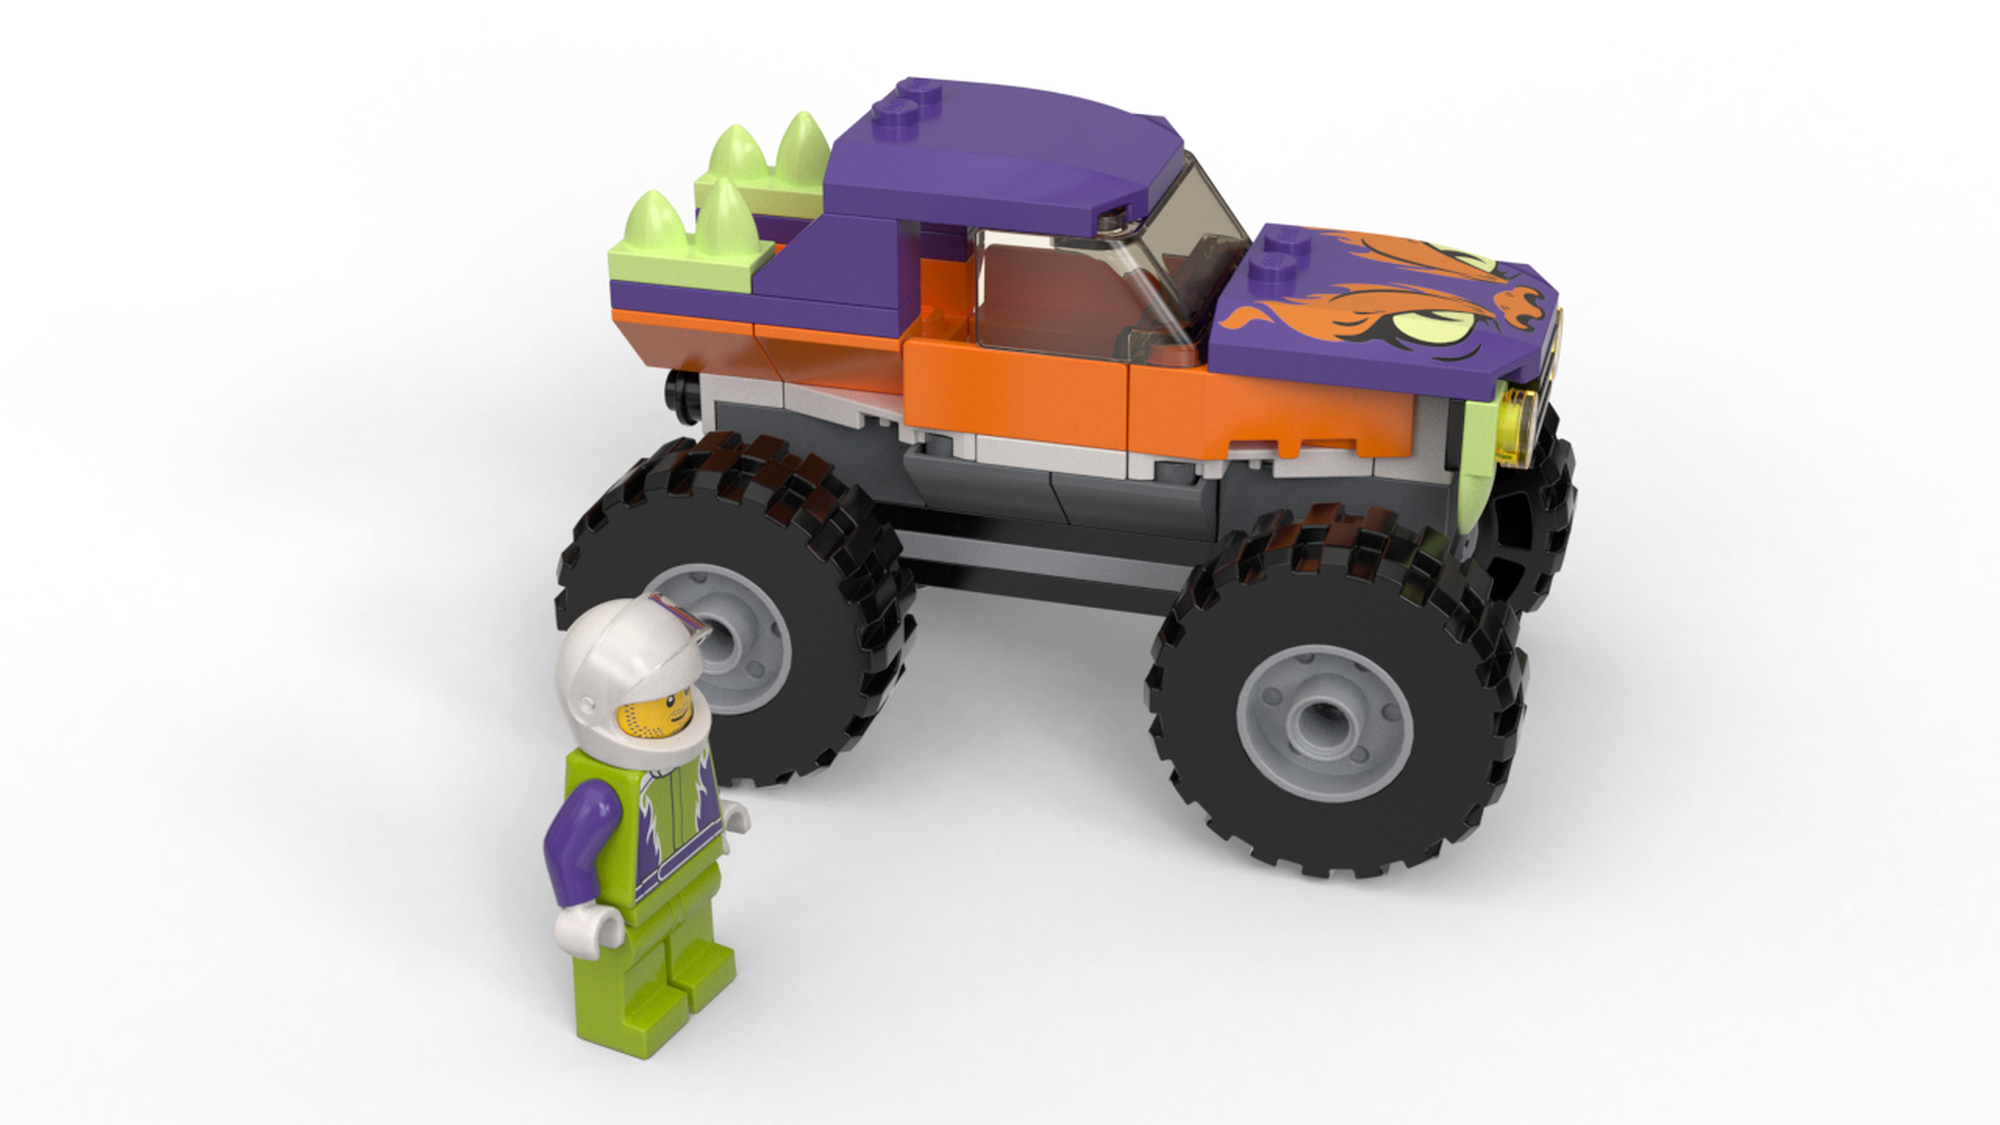 60251 LEGO® City Monster Truck Building Toy, 55 pc - Kroger